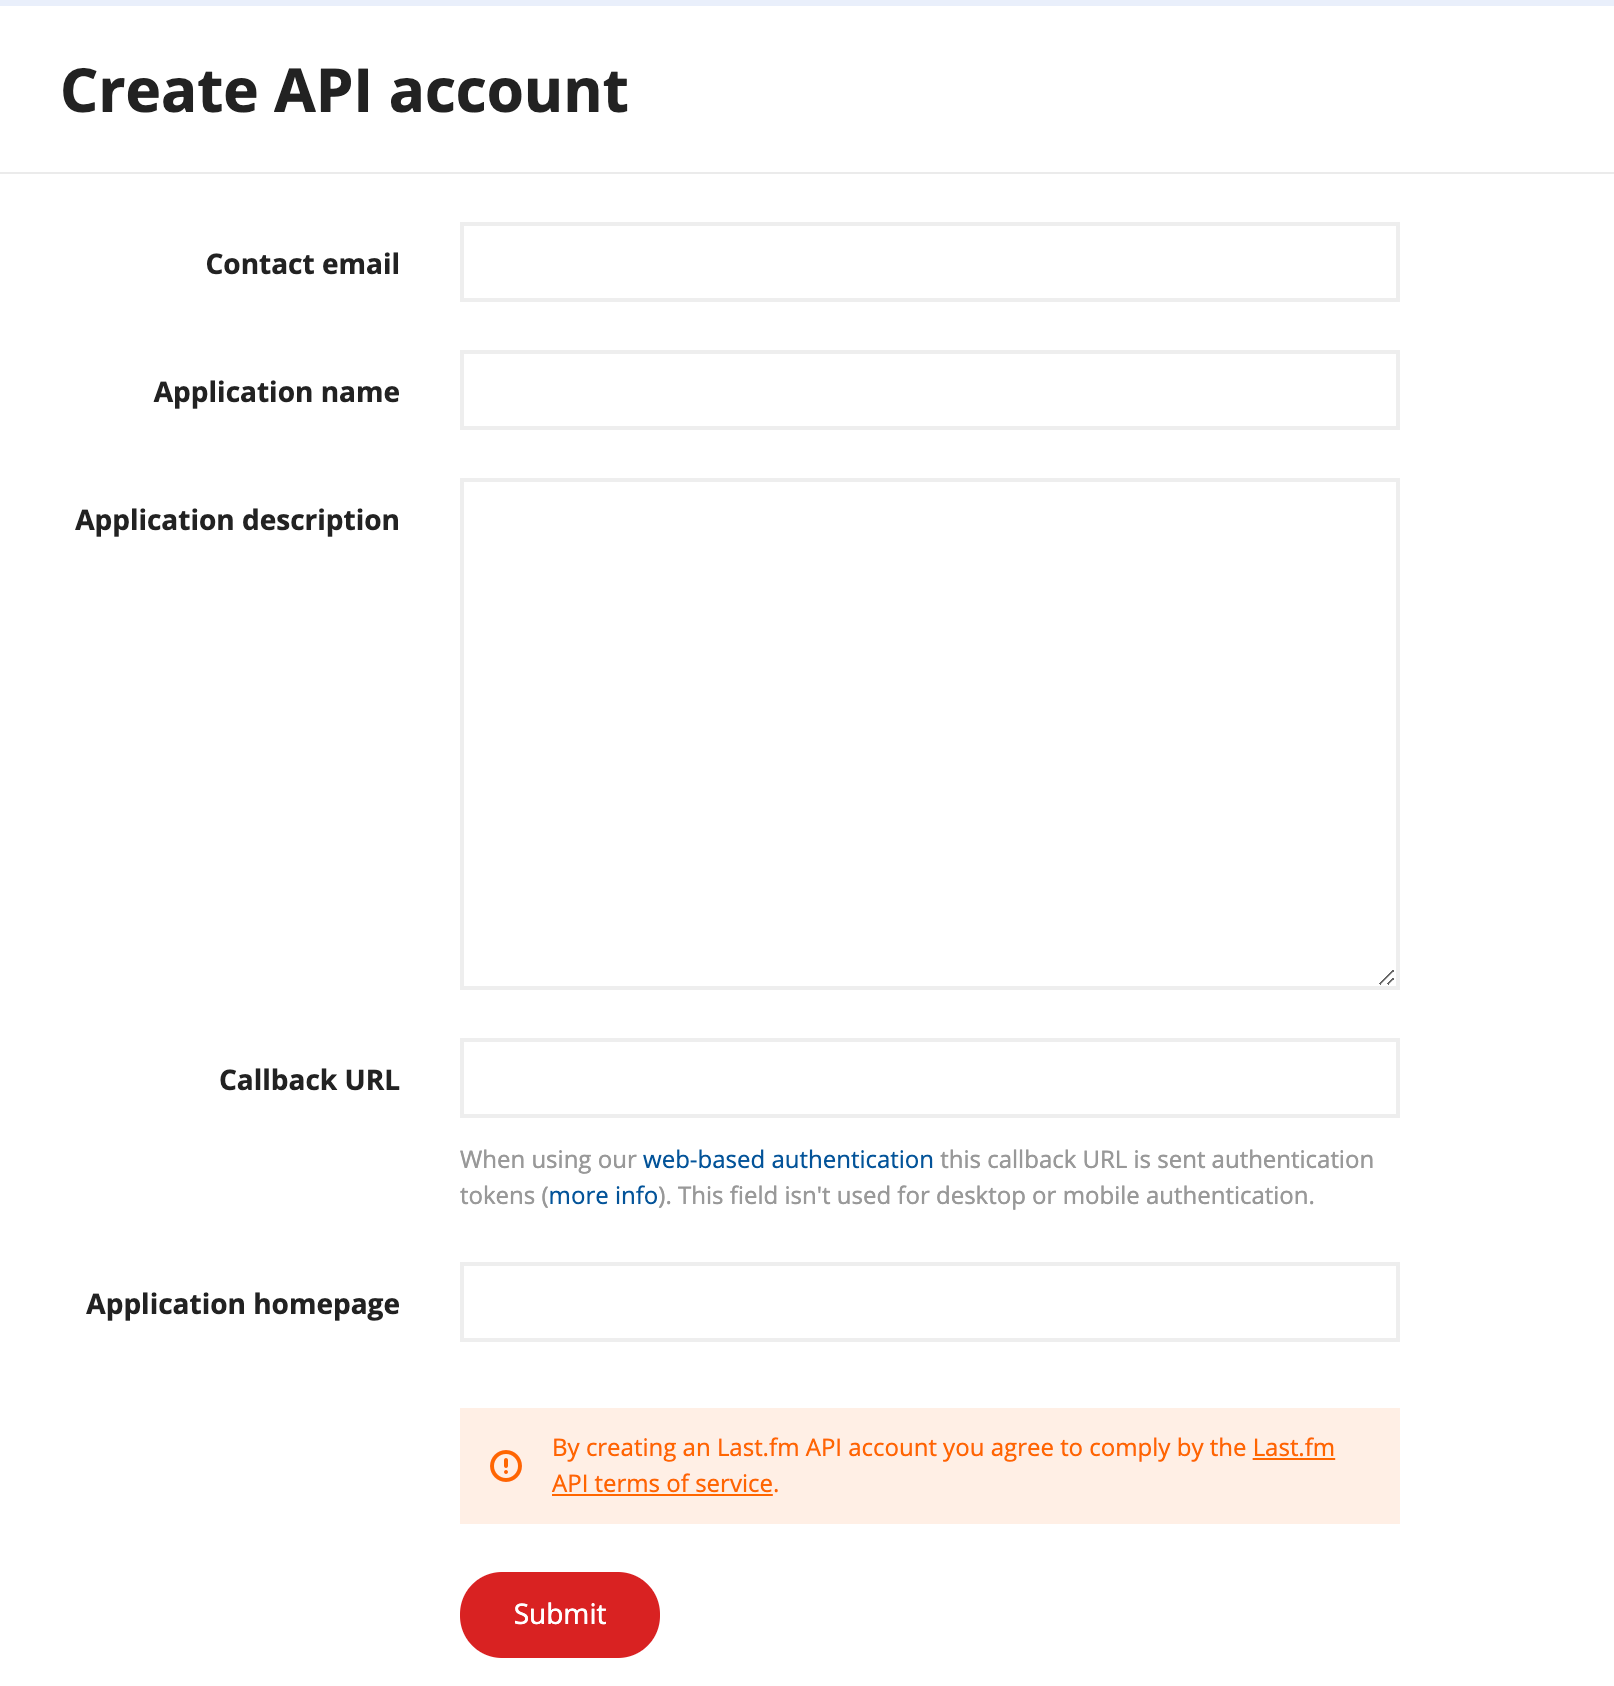 Create an API account